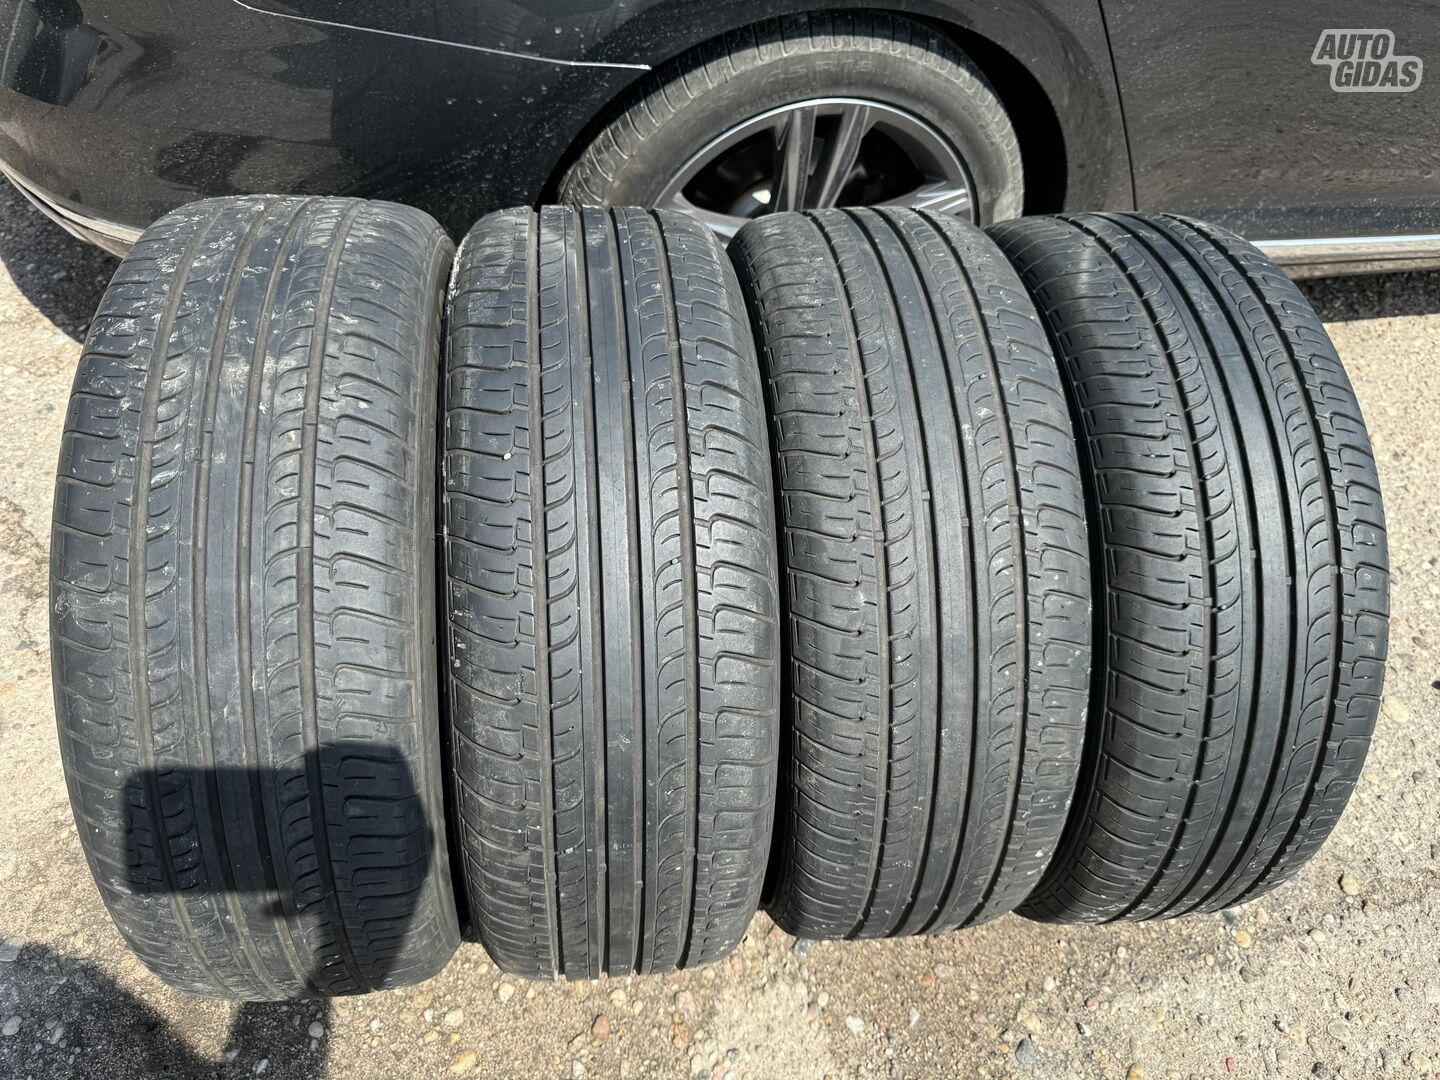 Hankook Siunciam, 6mm R18 summer tyres passanger car